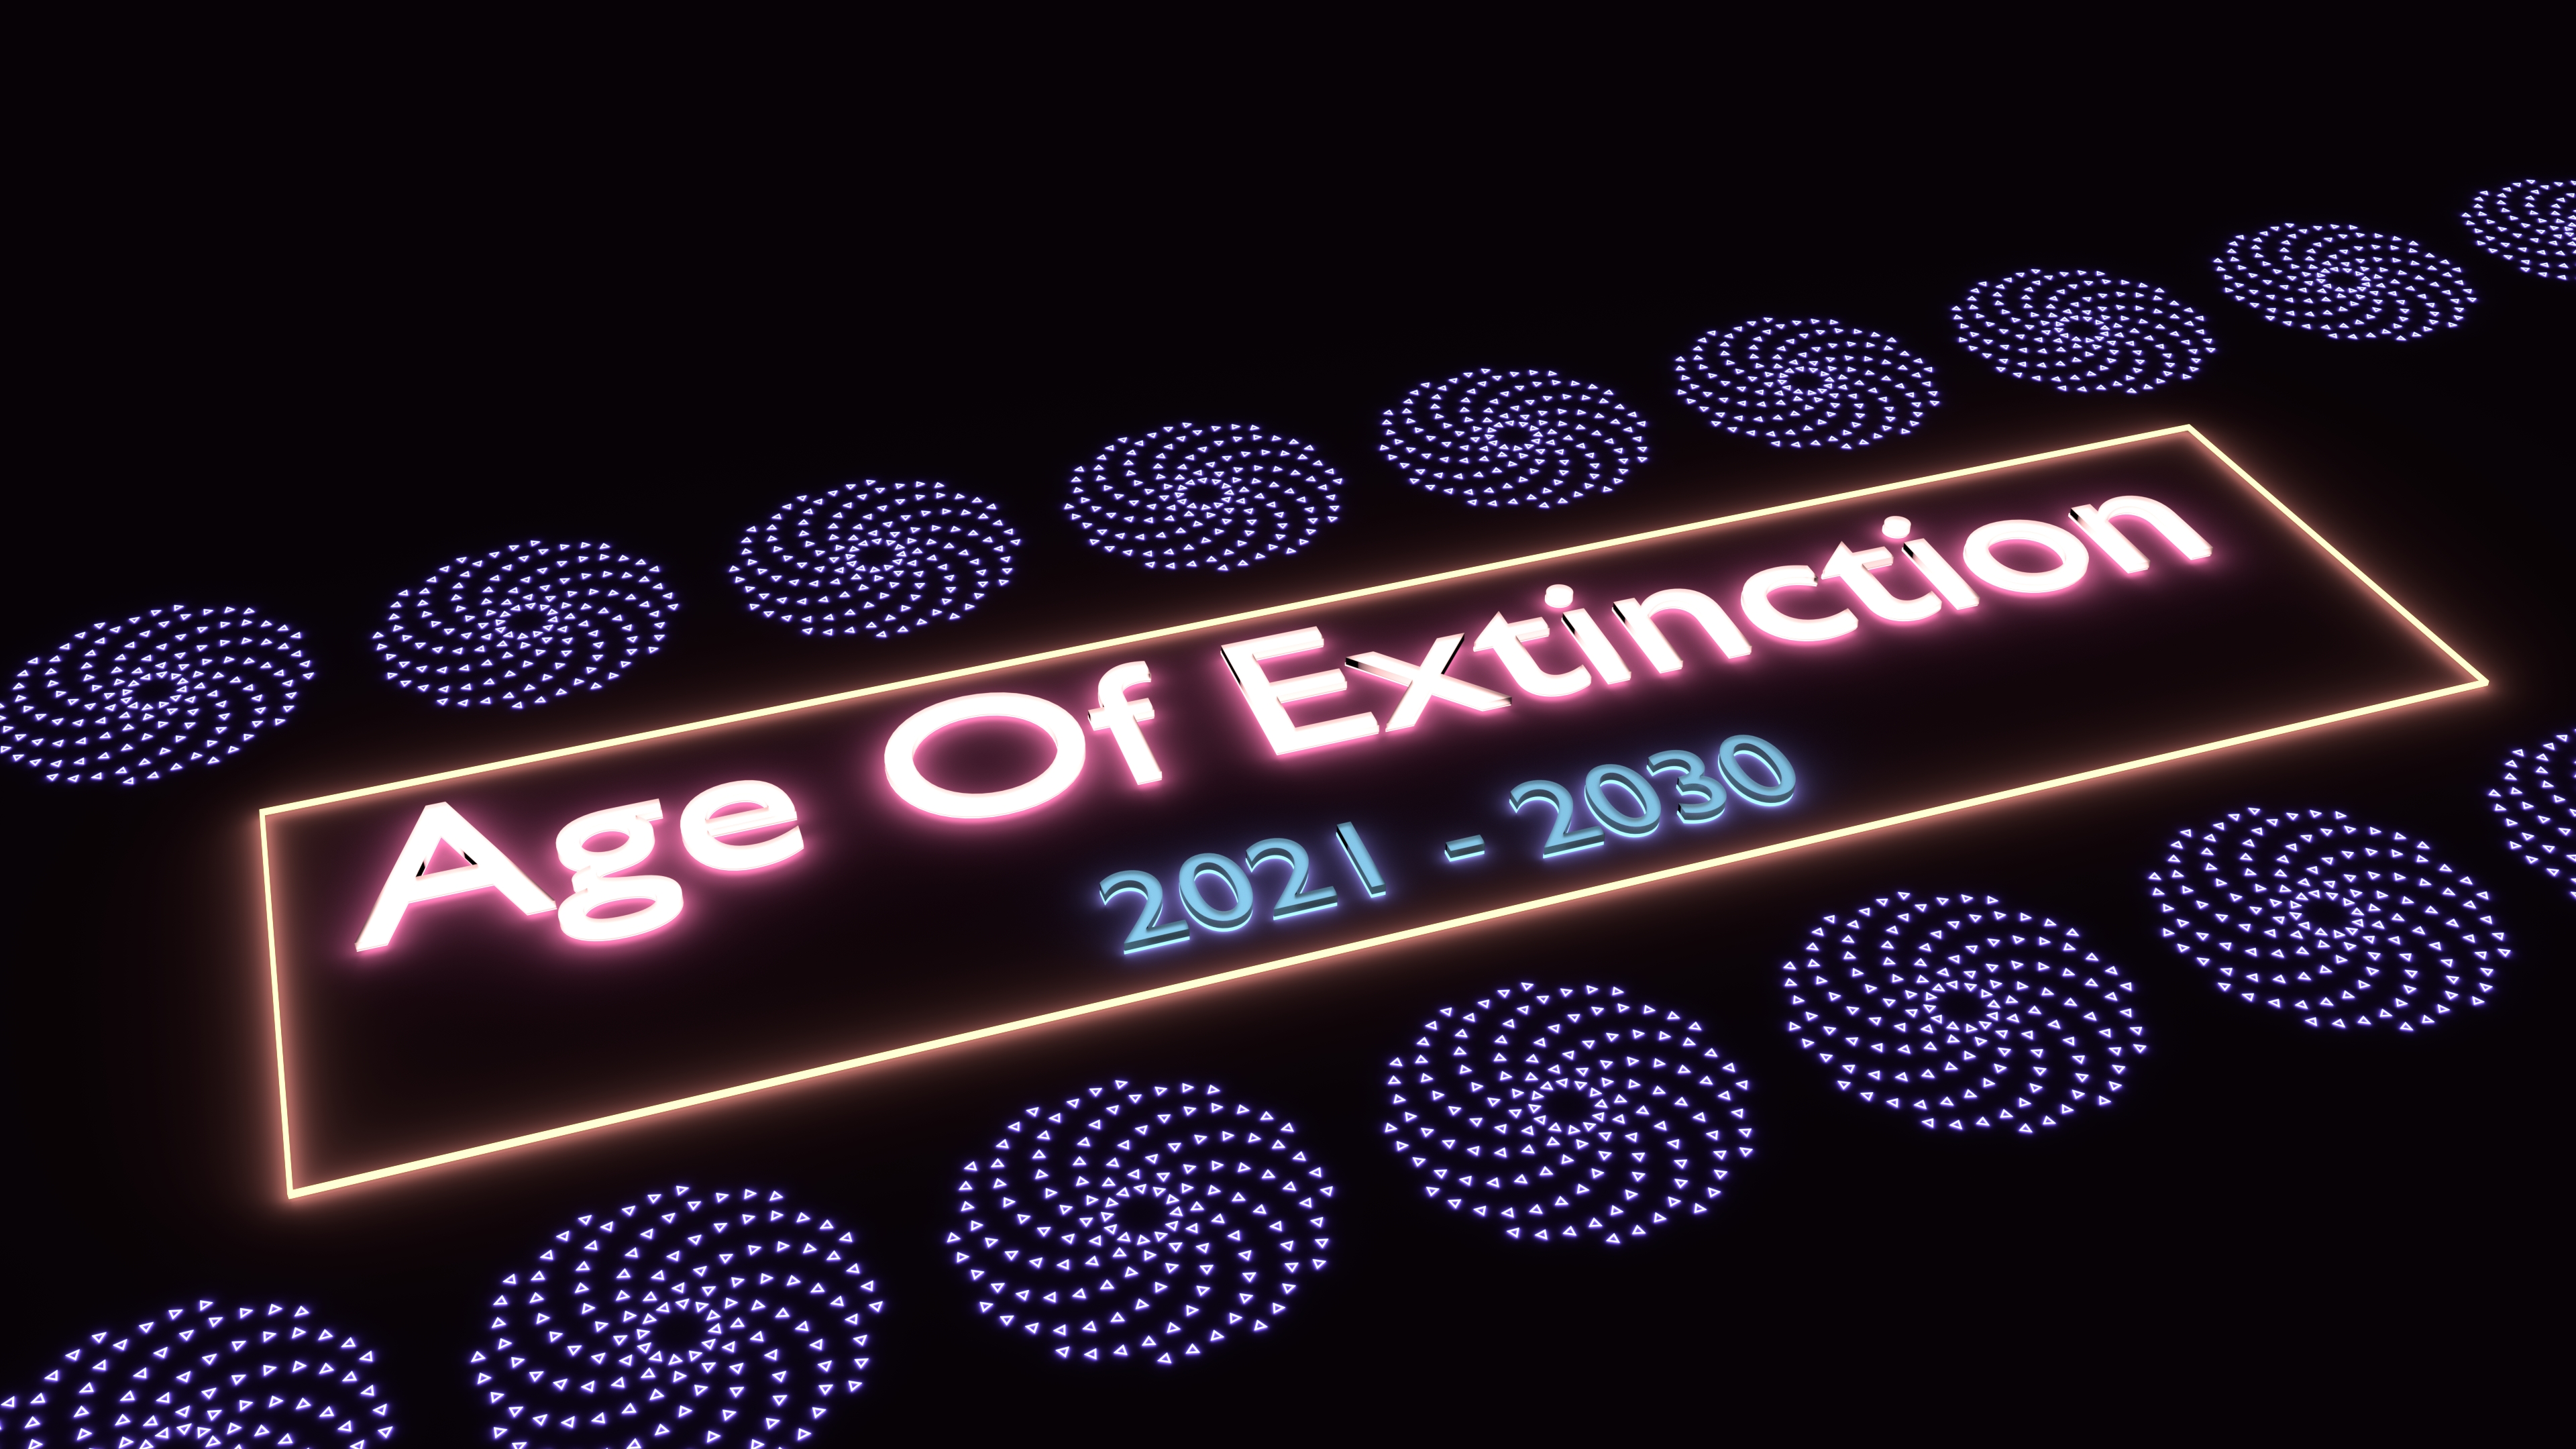 Age of Extinction 2021 - 2030 by viktik